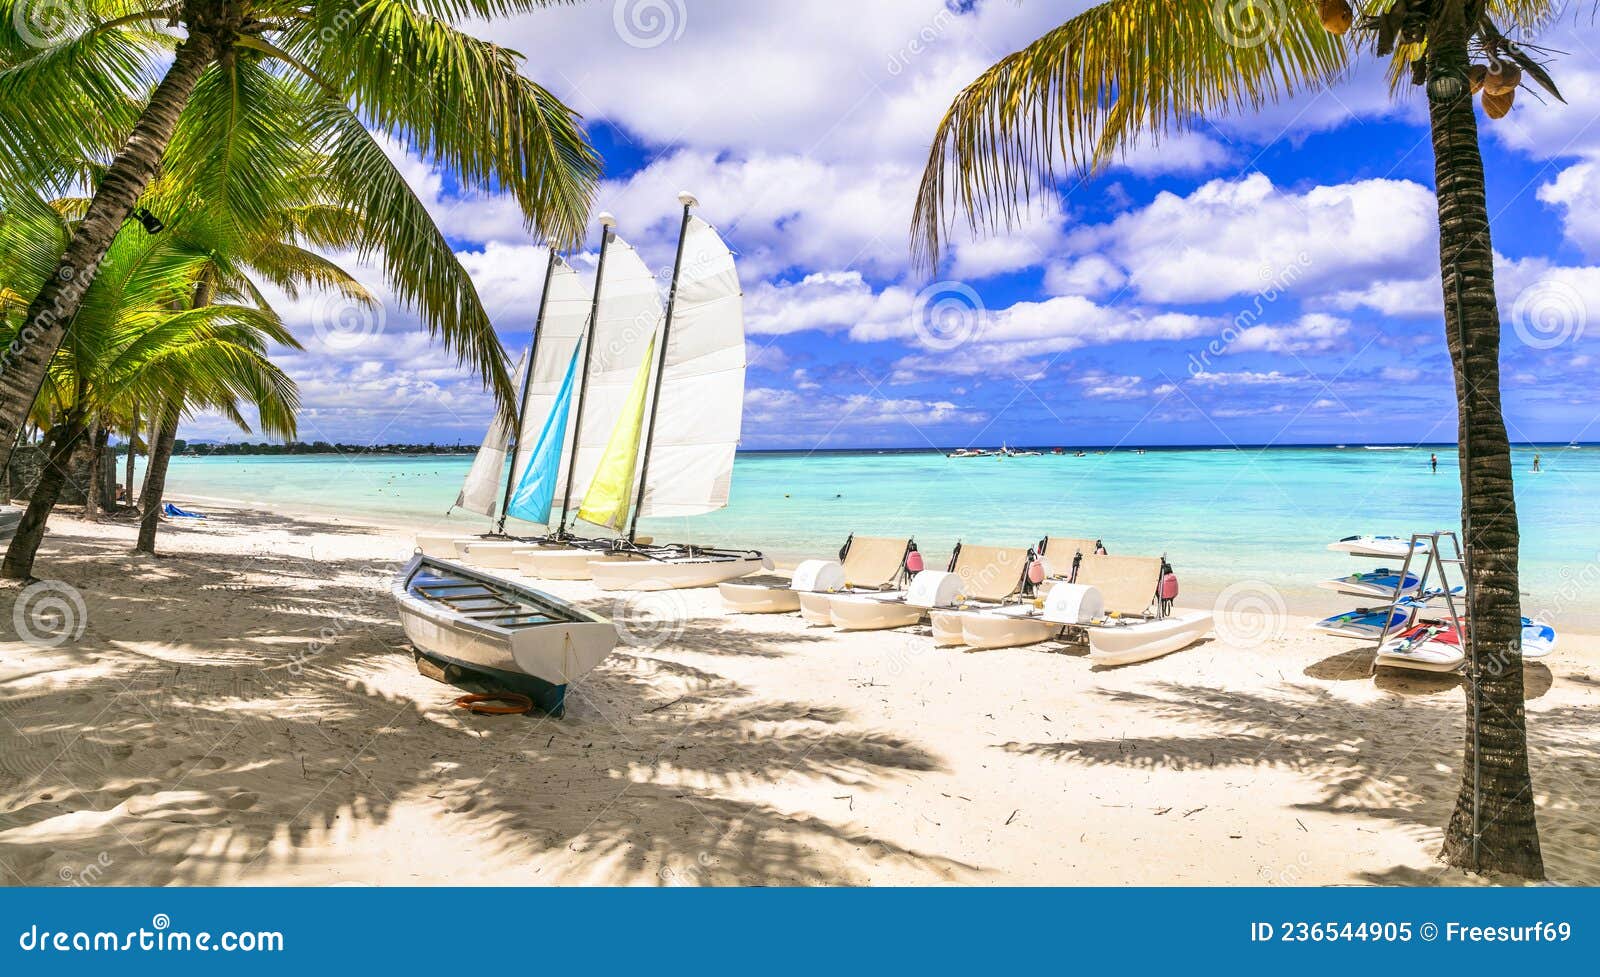 paradise tropical beach scenery. mauritius island